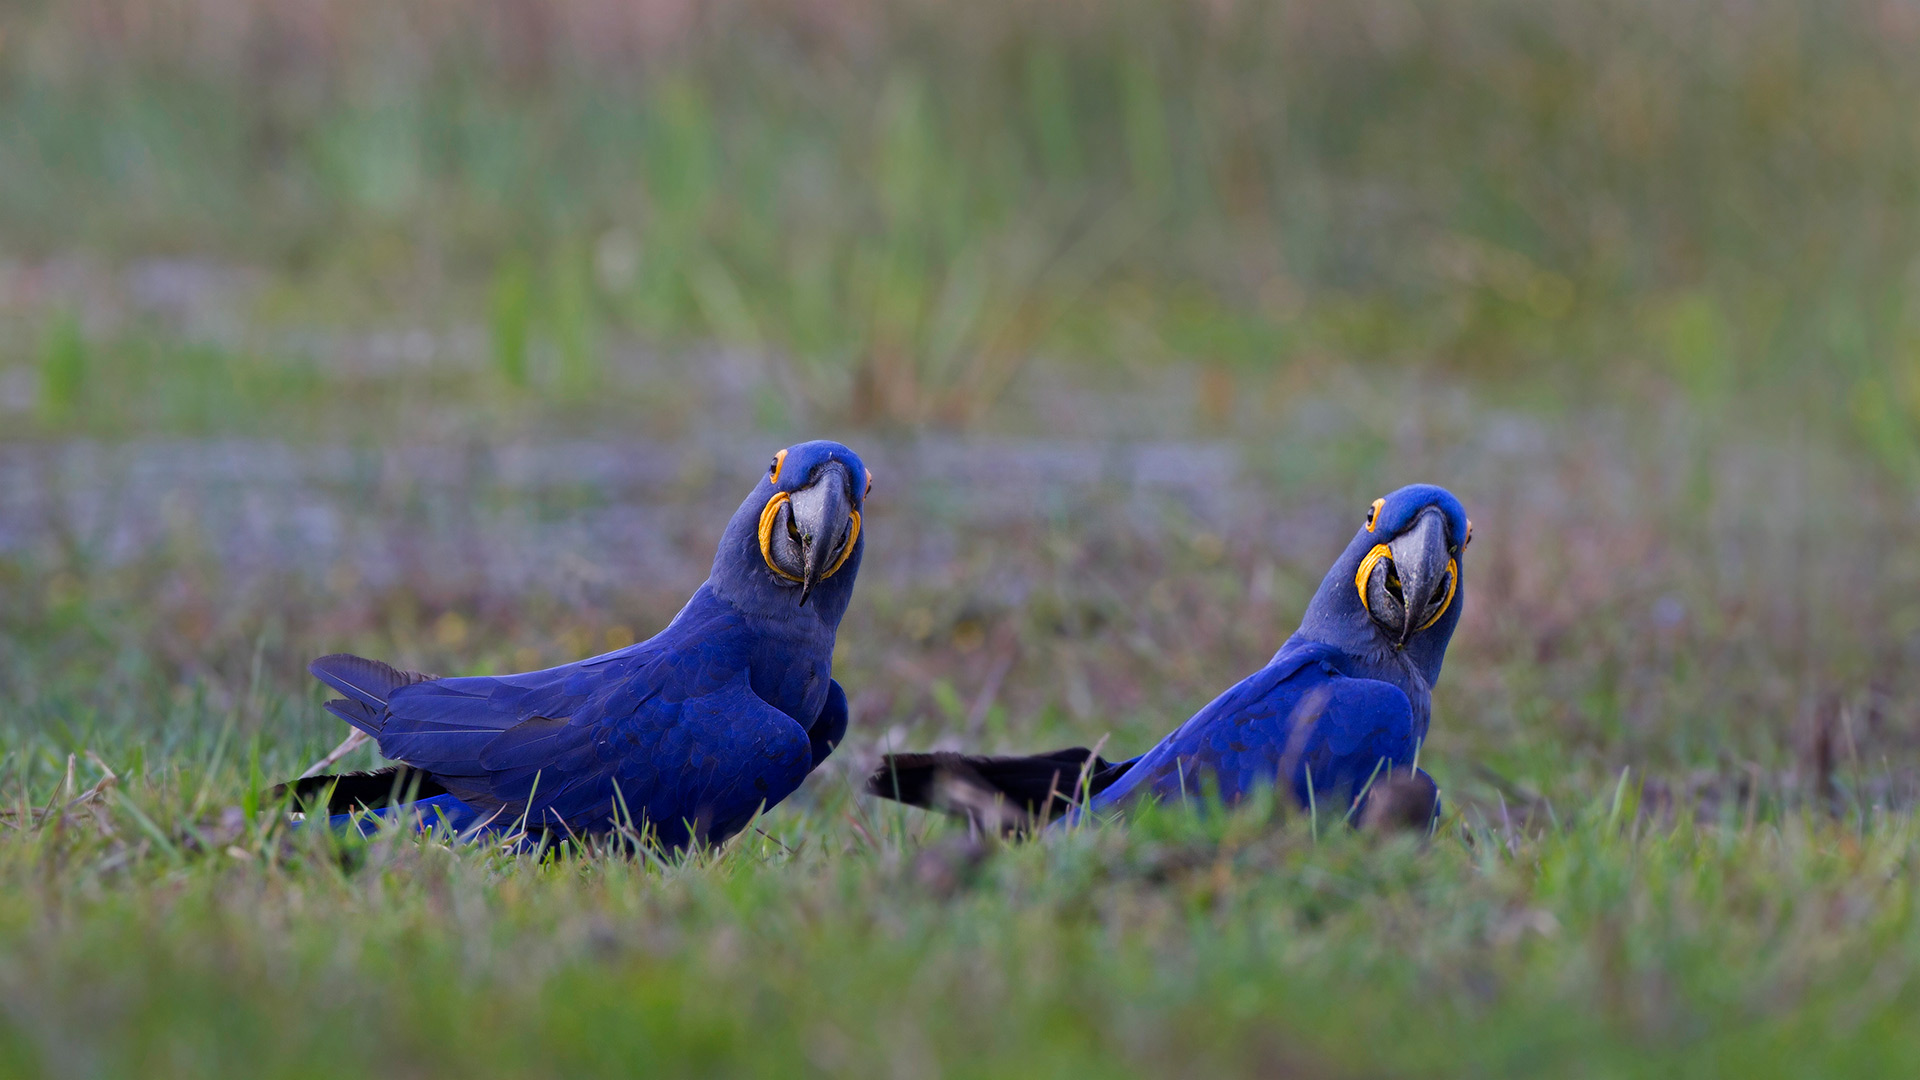 Hyacinth macaws in the Pantanal region of Brazil - David Pattyn